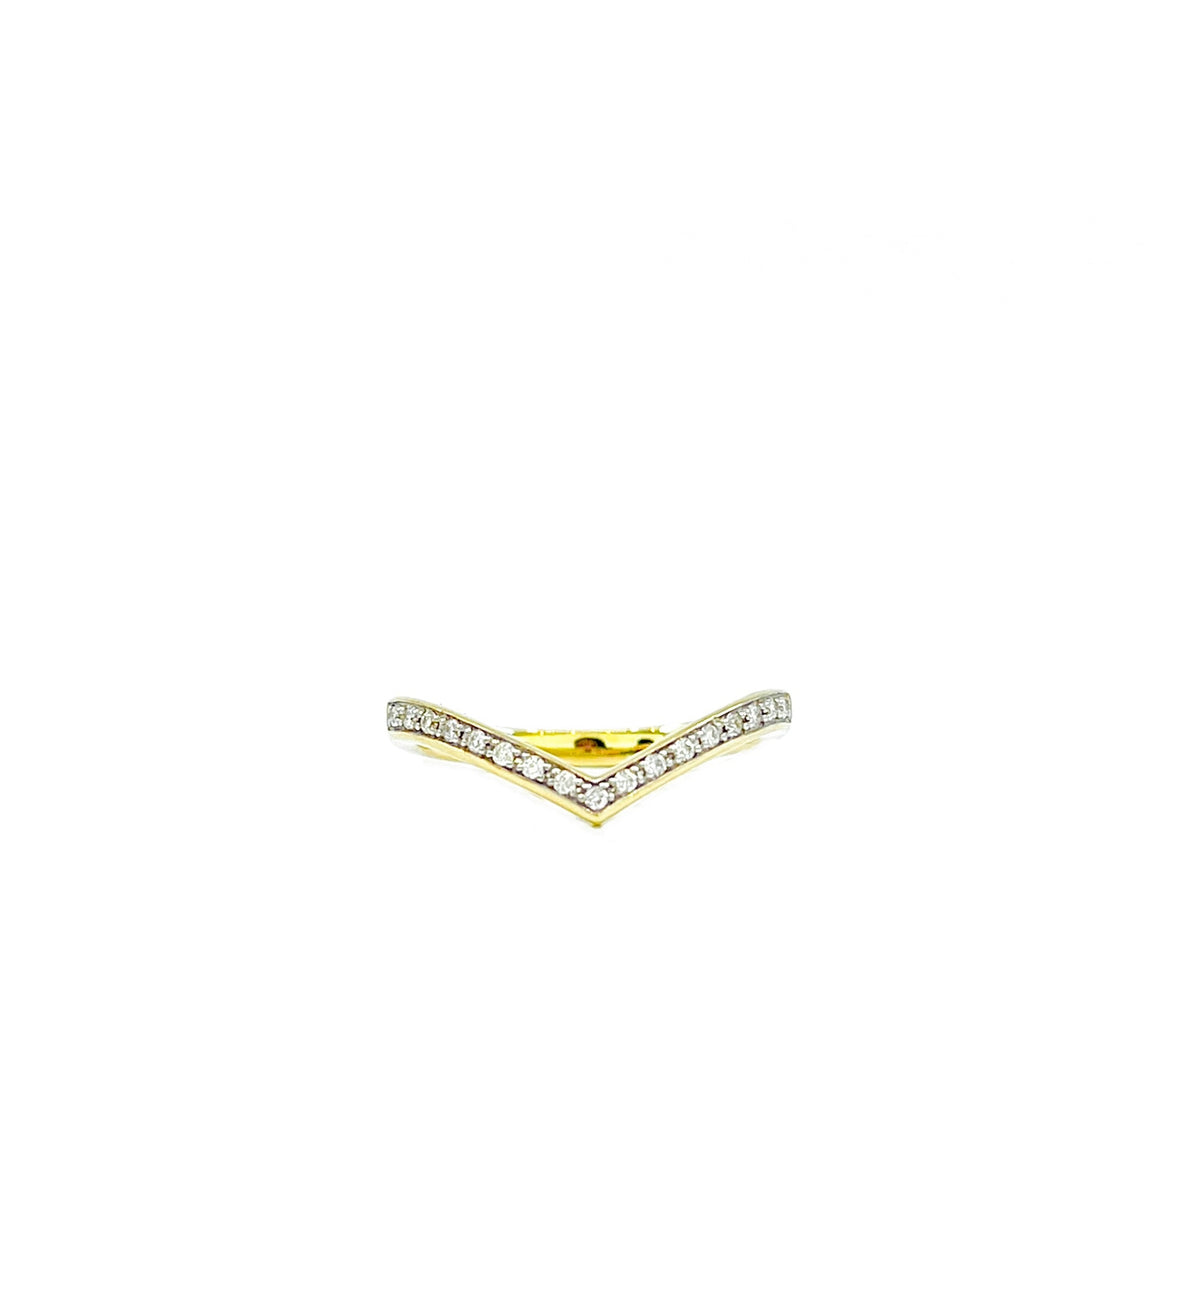 10K Yellow Gold 0.10cttw Round Cut Diamond Ring, size 6.5